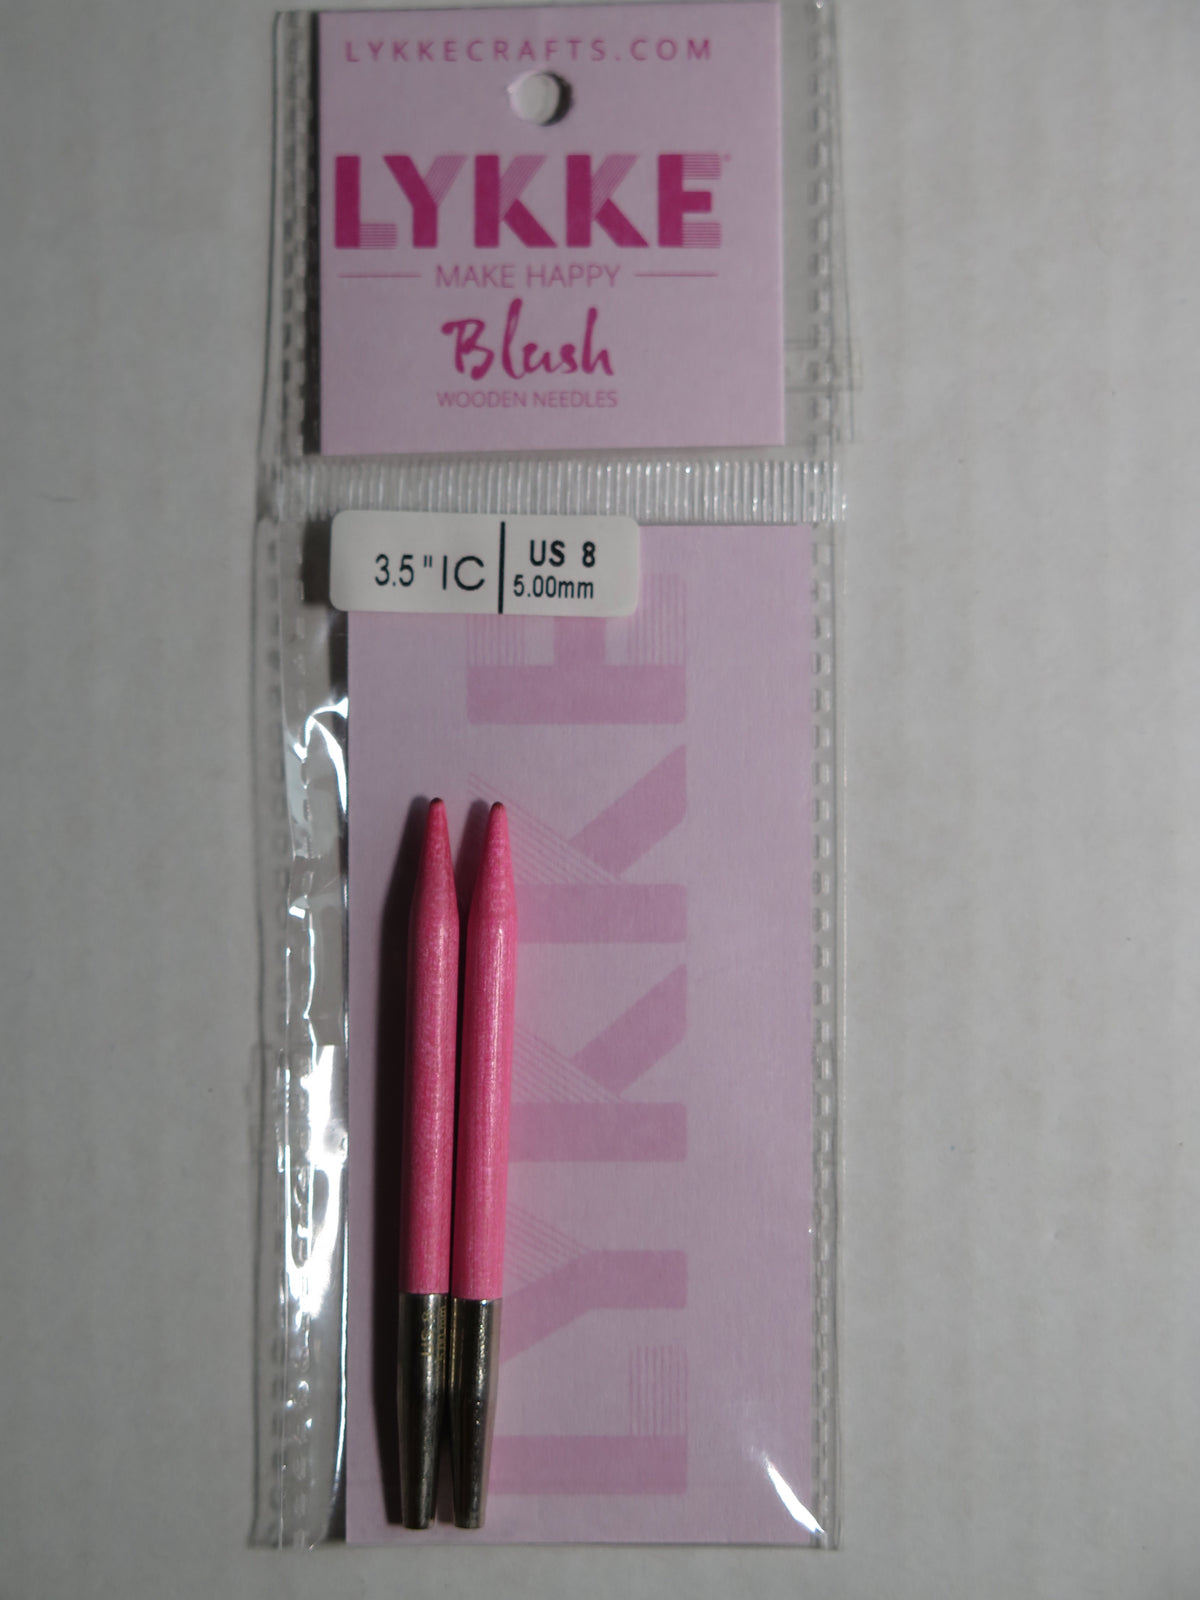 Lykke Blush - 3.5in Interchangeable Needle Tips US8 5.00mm